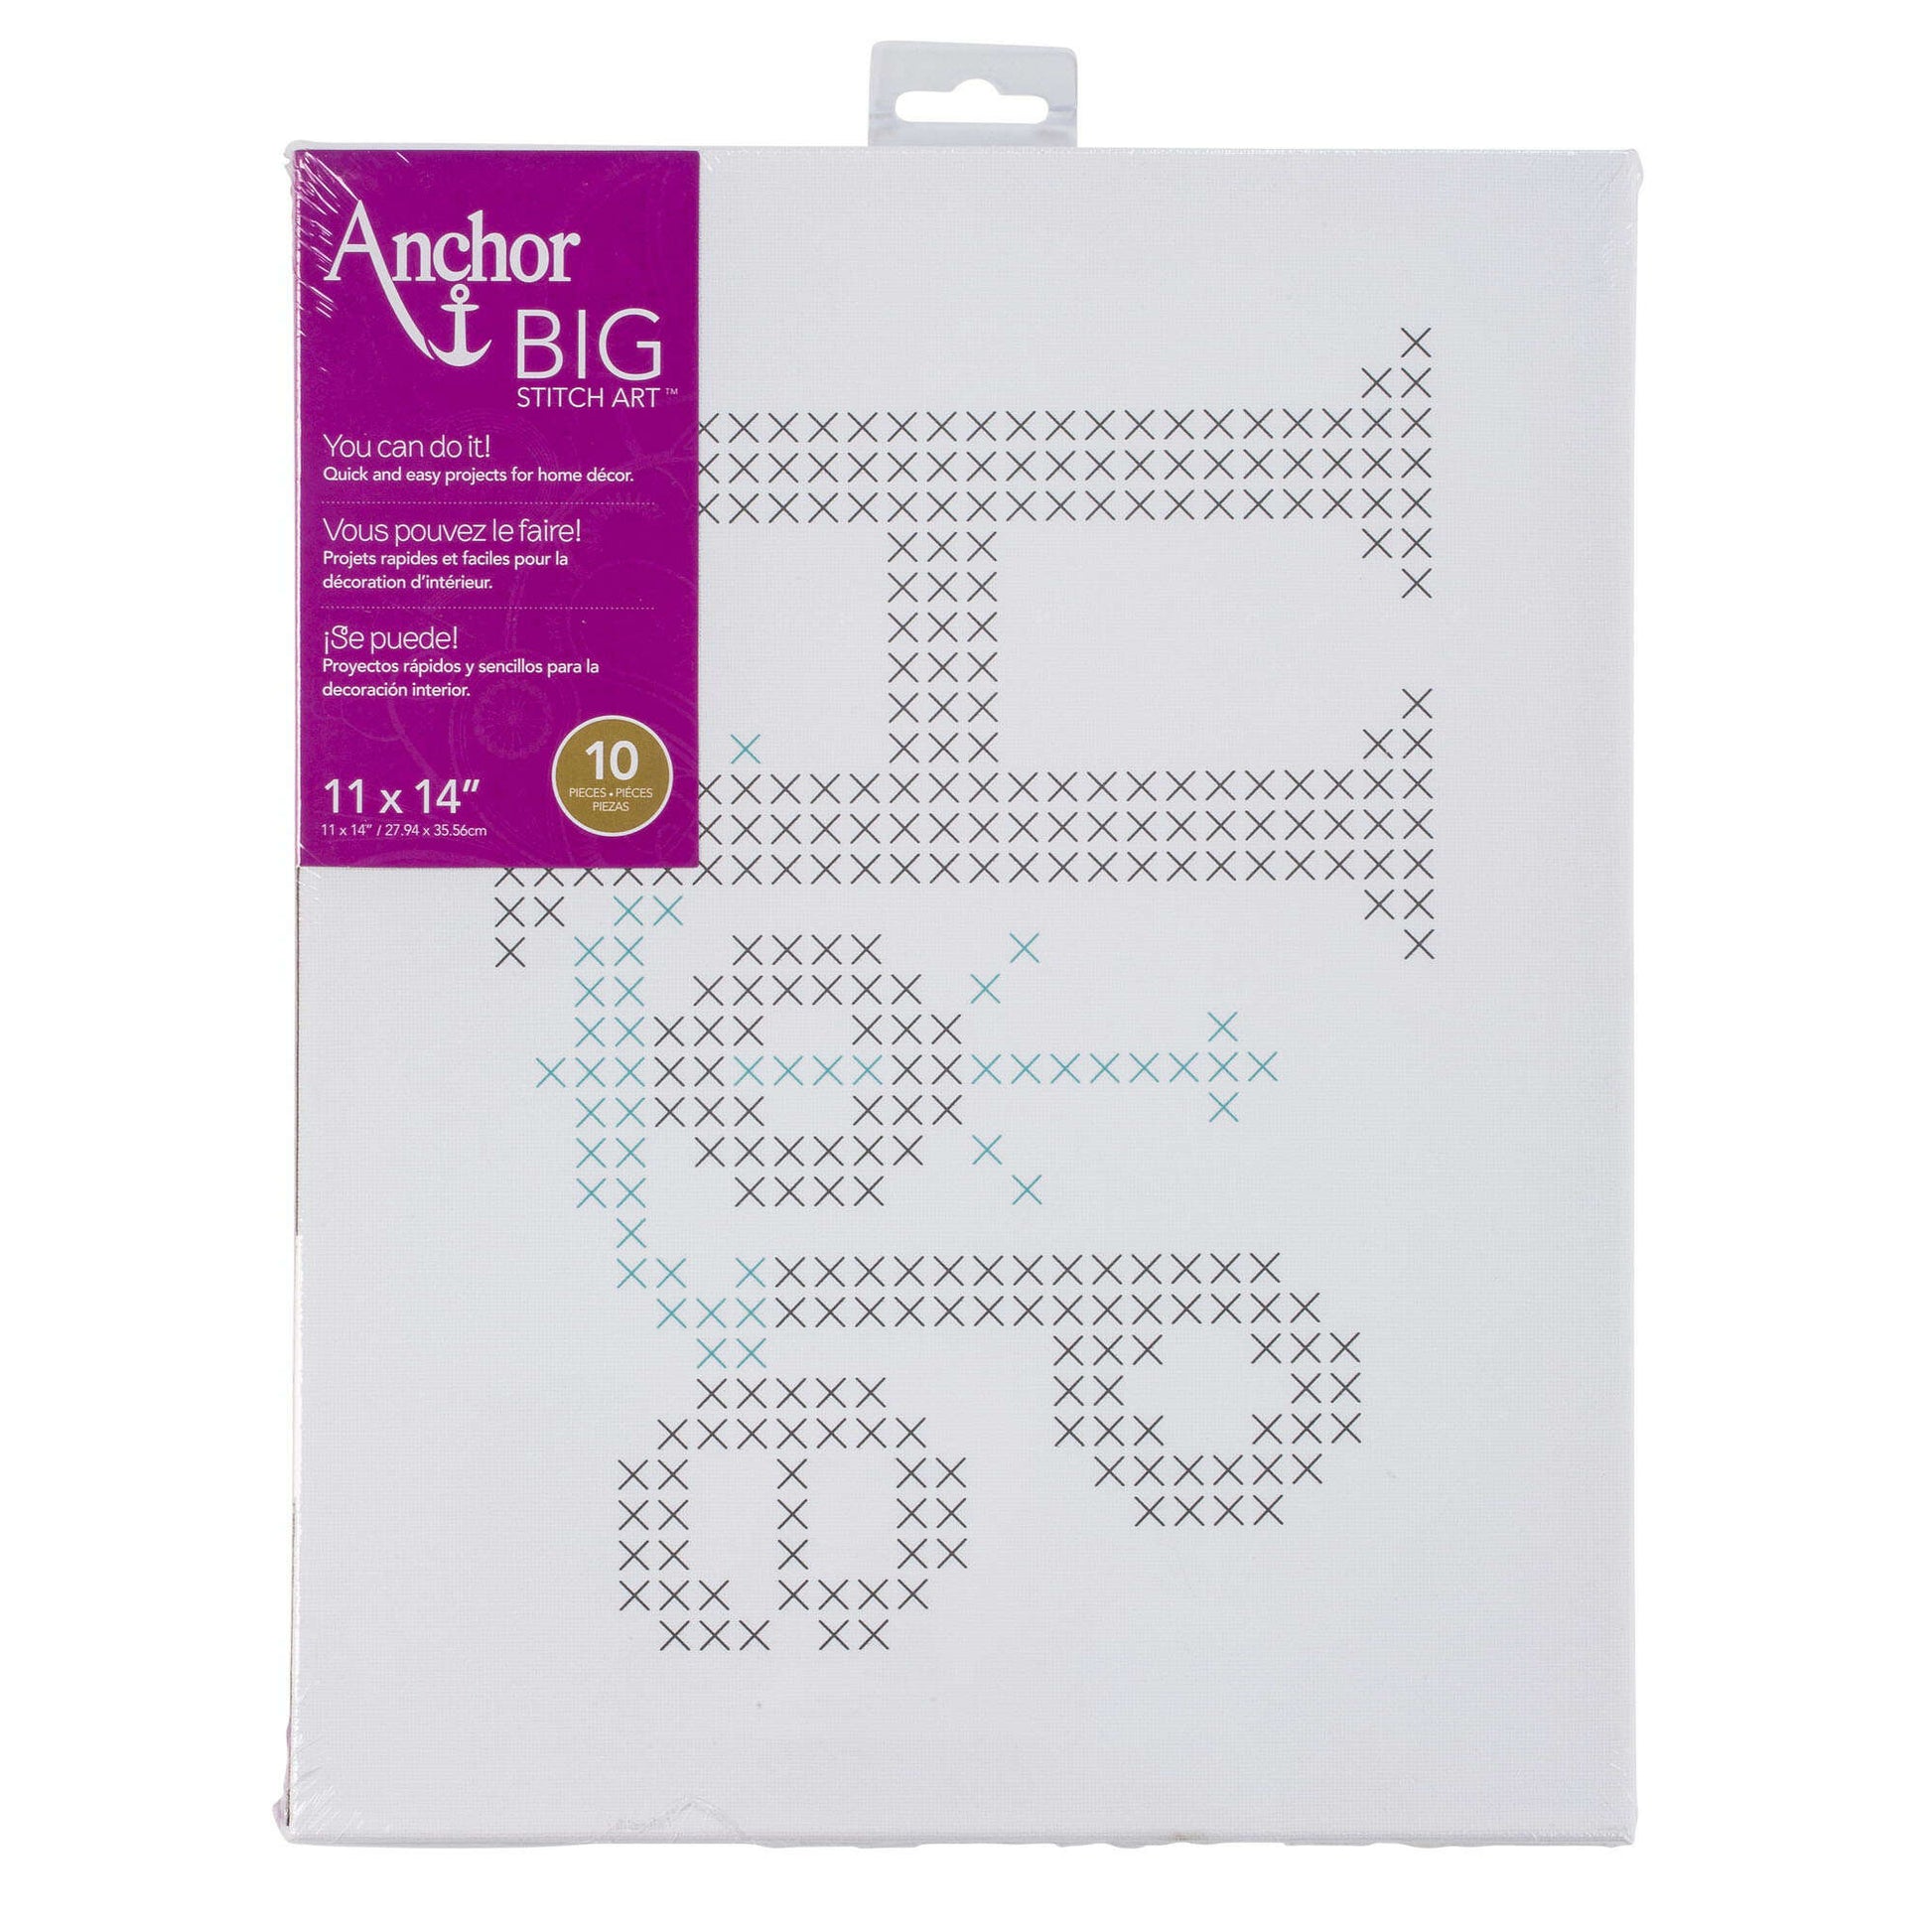 Anchor Big Stitch Art 11 x 14 - Clearance Items*